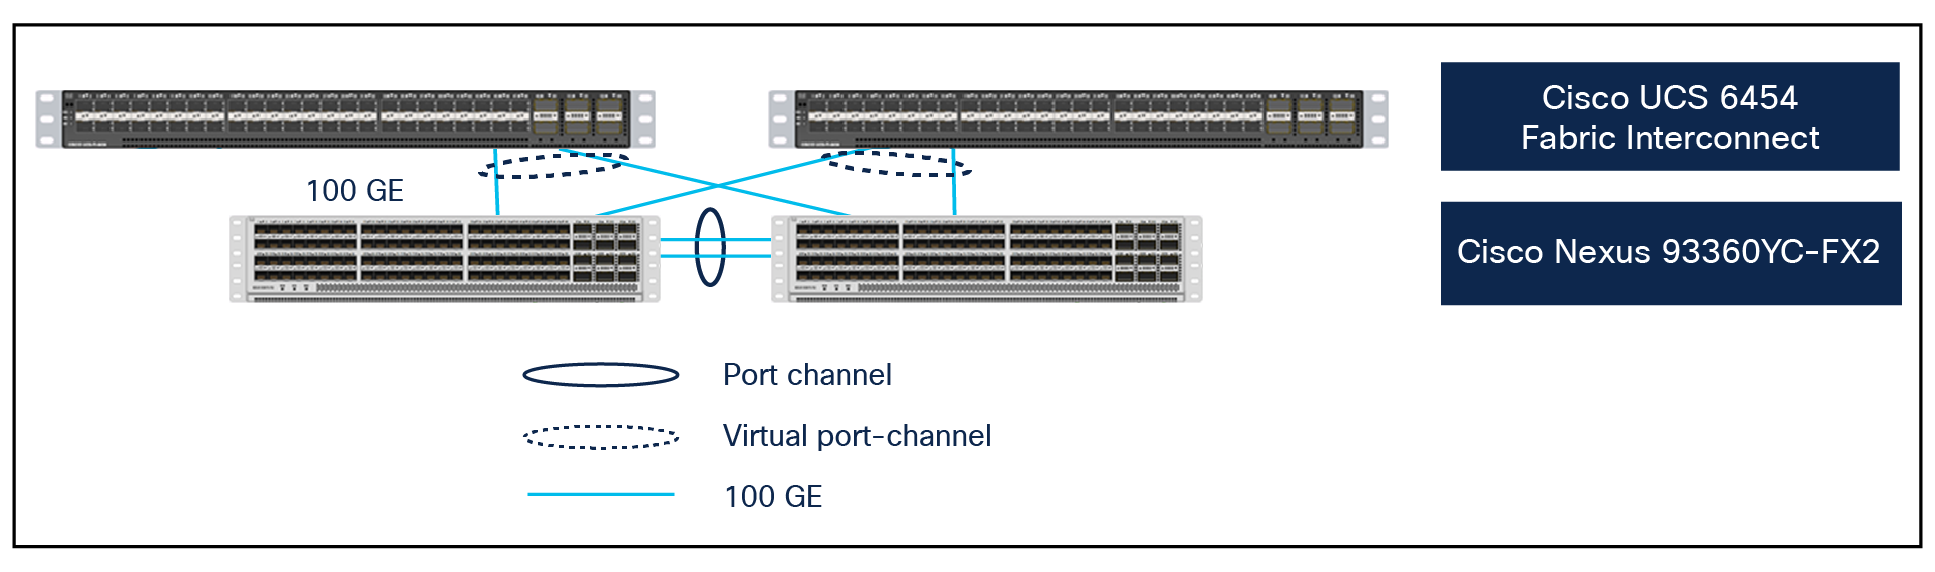 Cisco UCS 6454 FI Ethernet connectivity